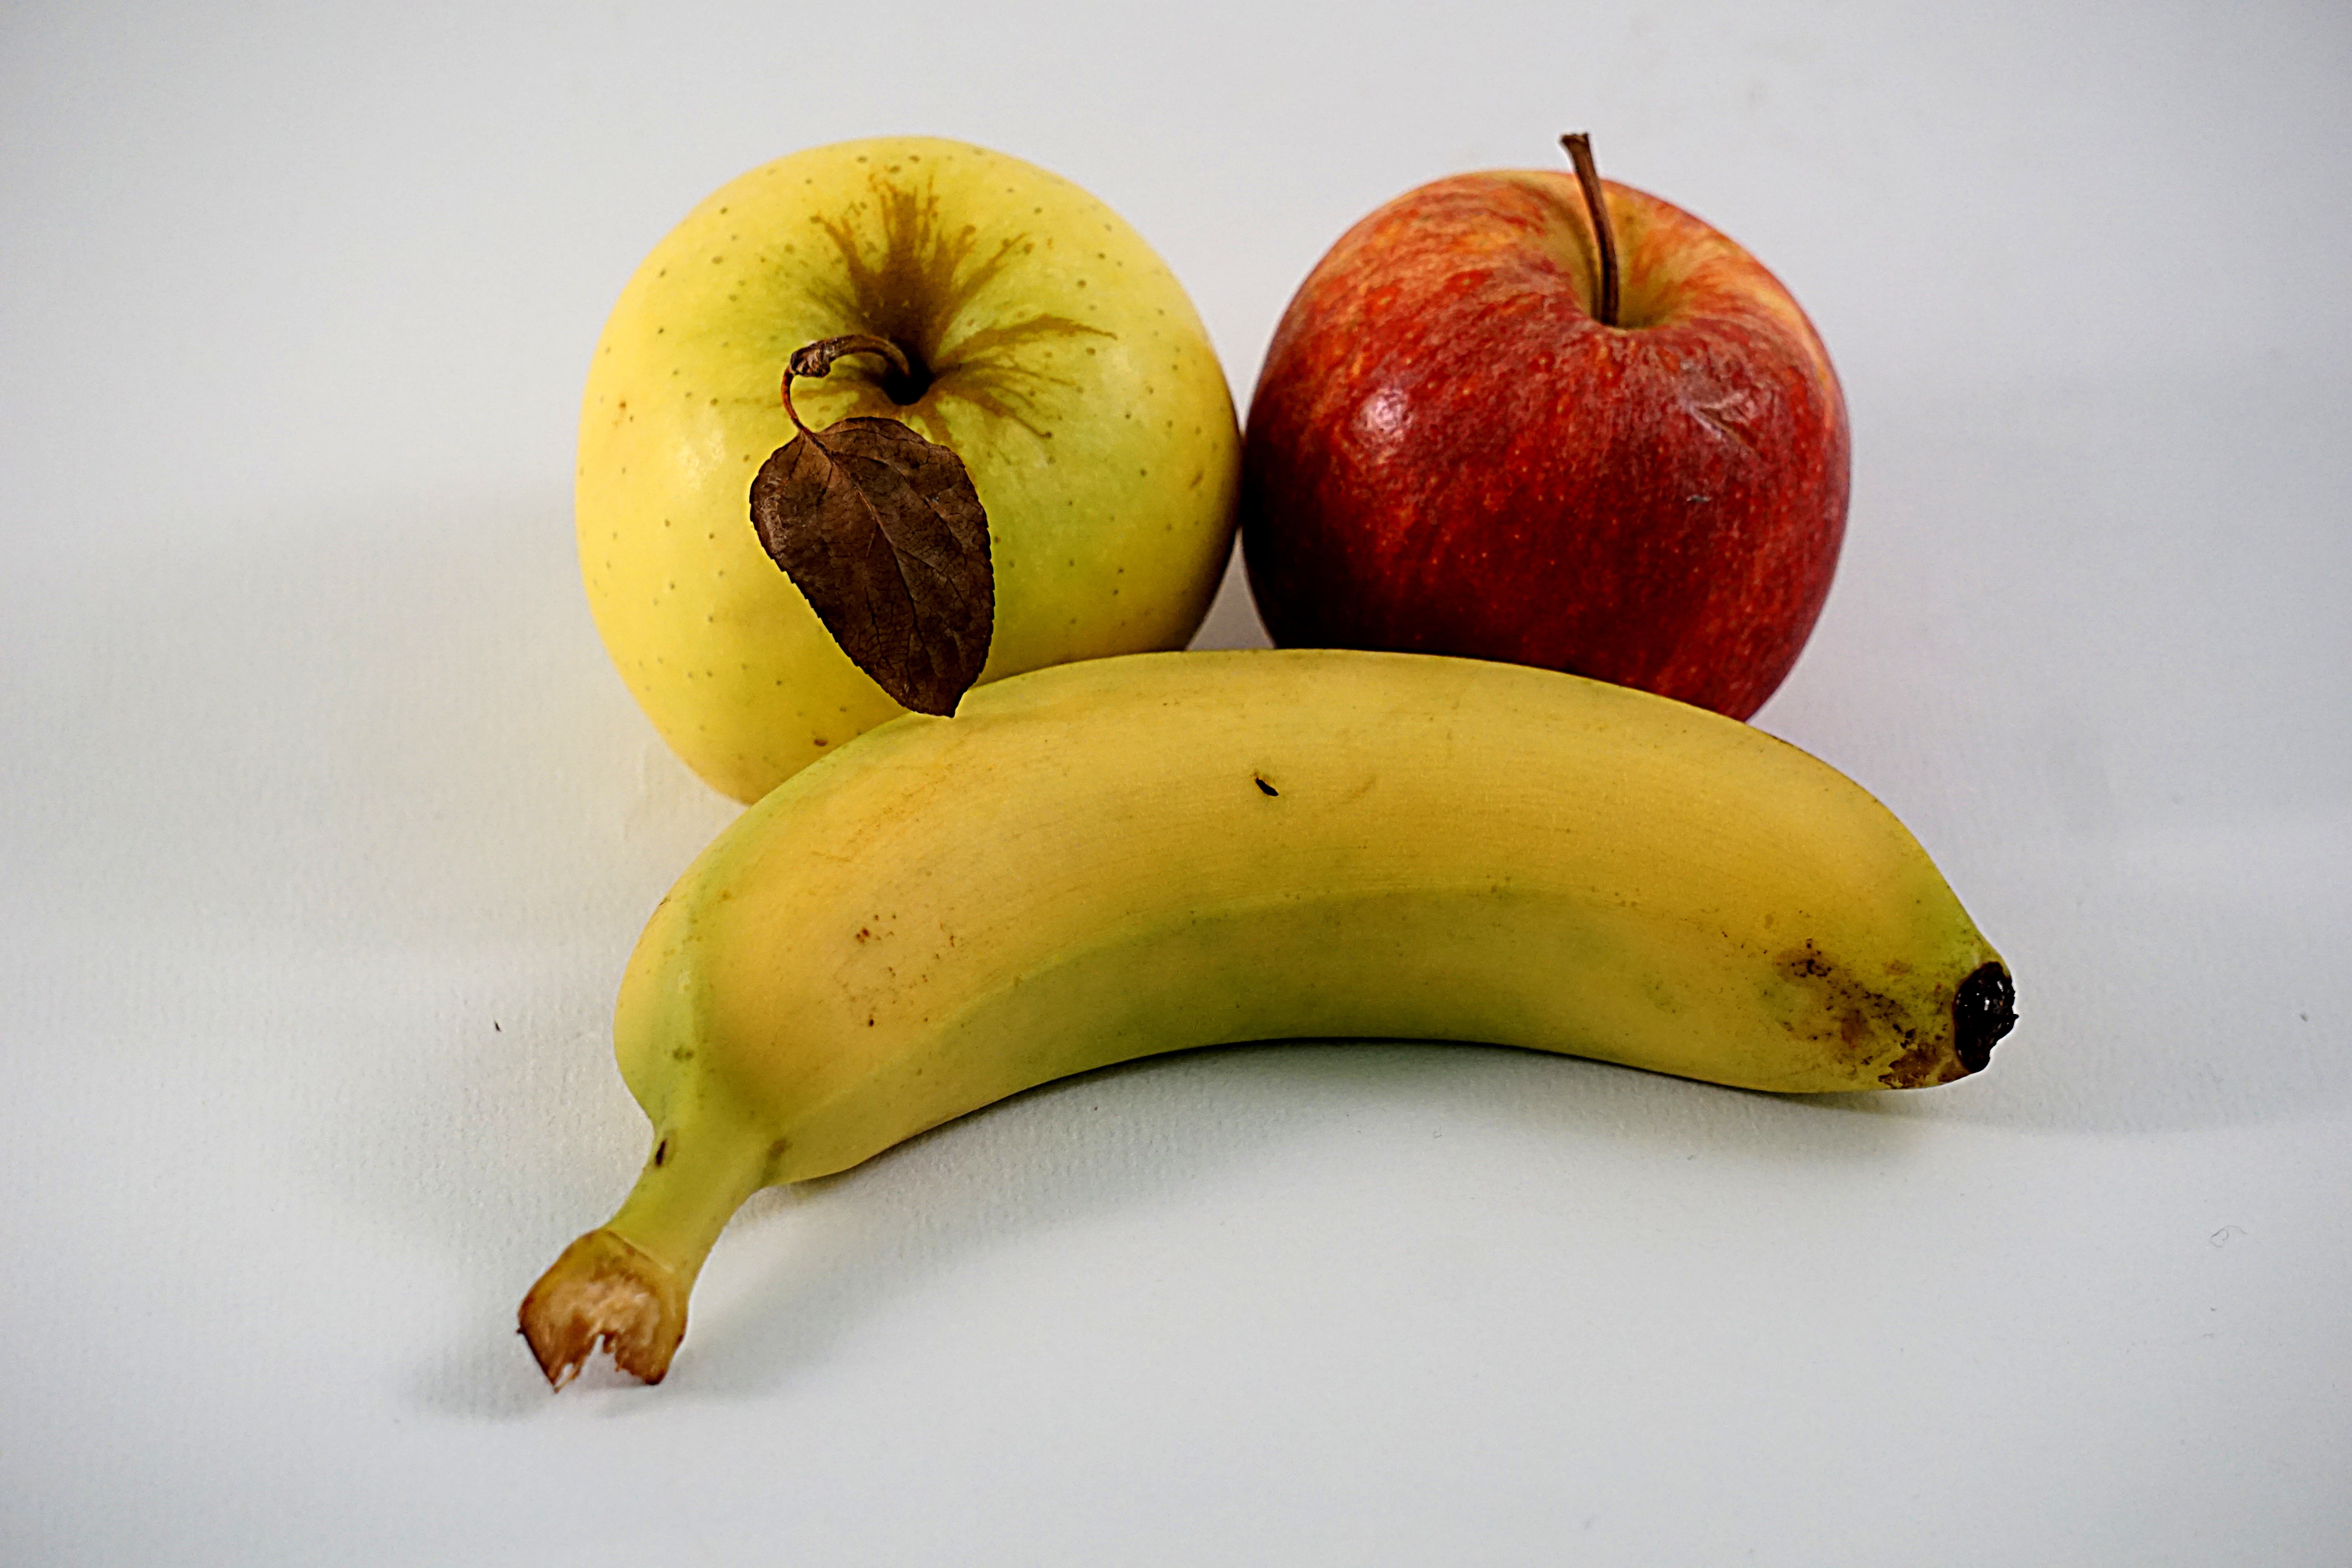 yellow banana and red apple fruit